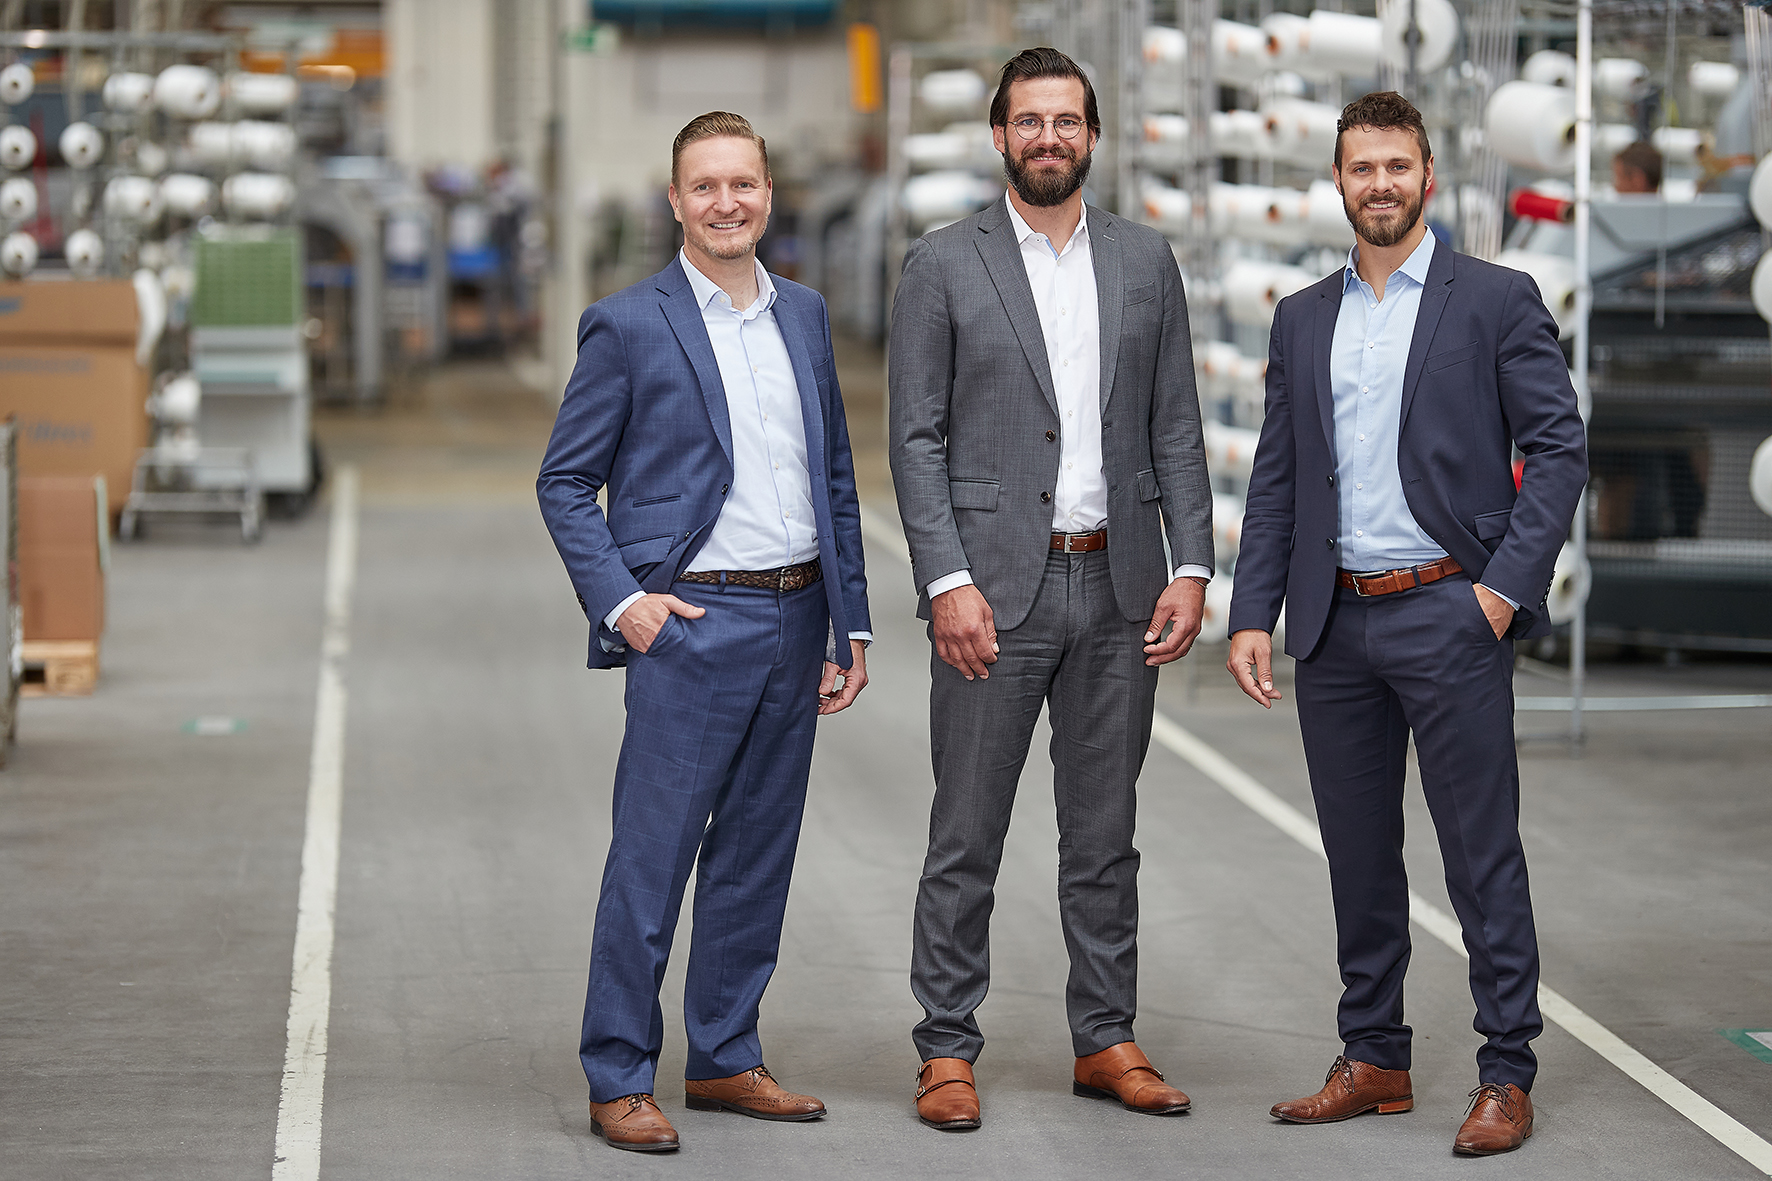  The Mayer & Cie. Management team (from left to right): Marcus Mayer, Sebastian Mayer, Benjamin Mayer. © Ralph Koch for Mayer & Cie.